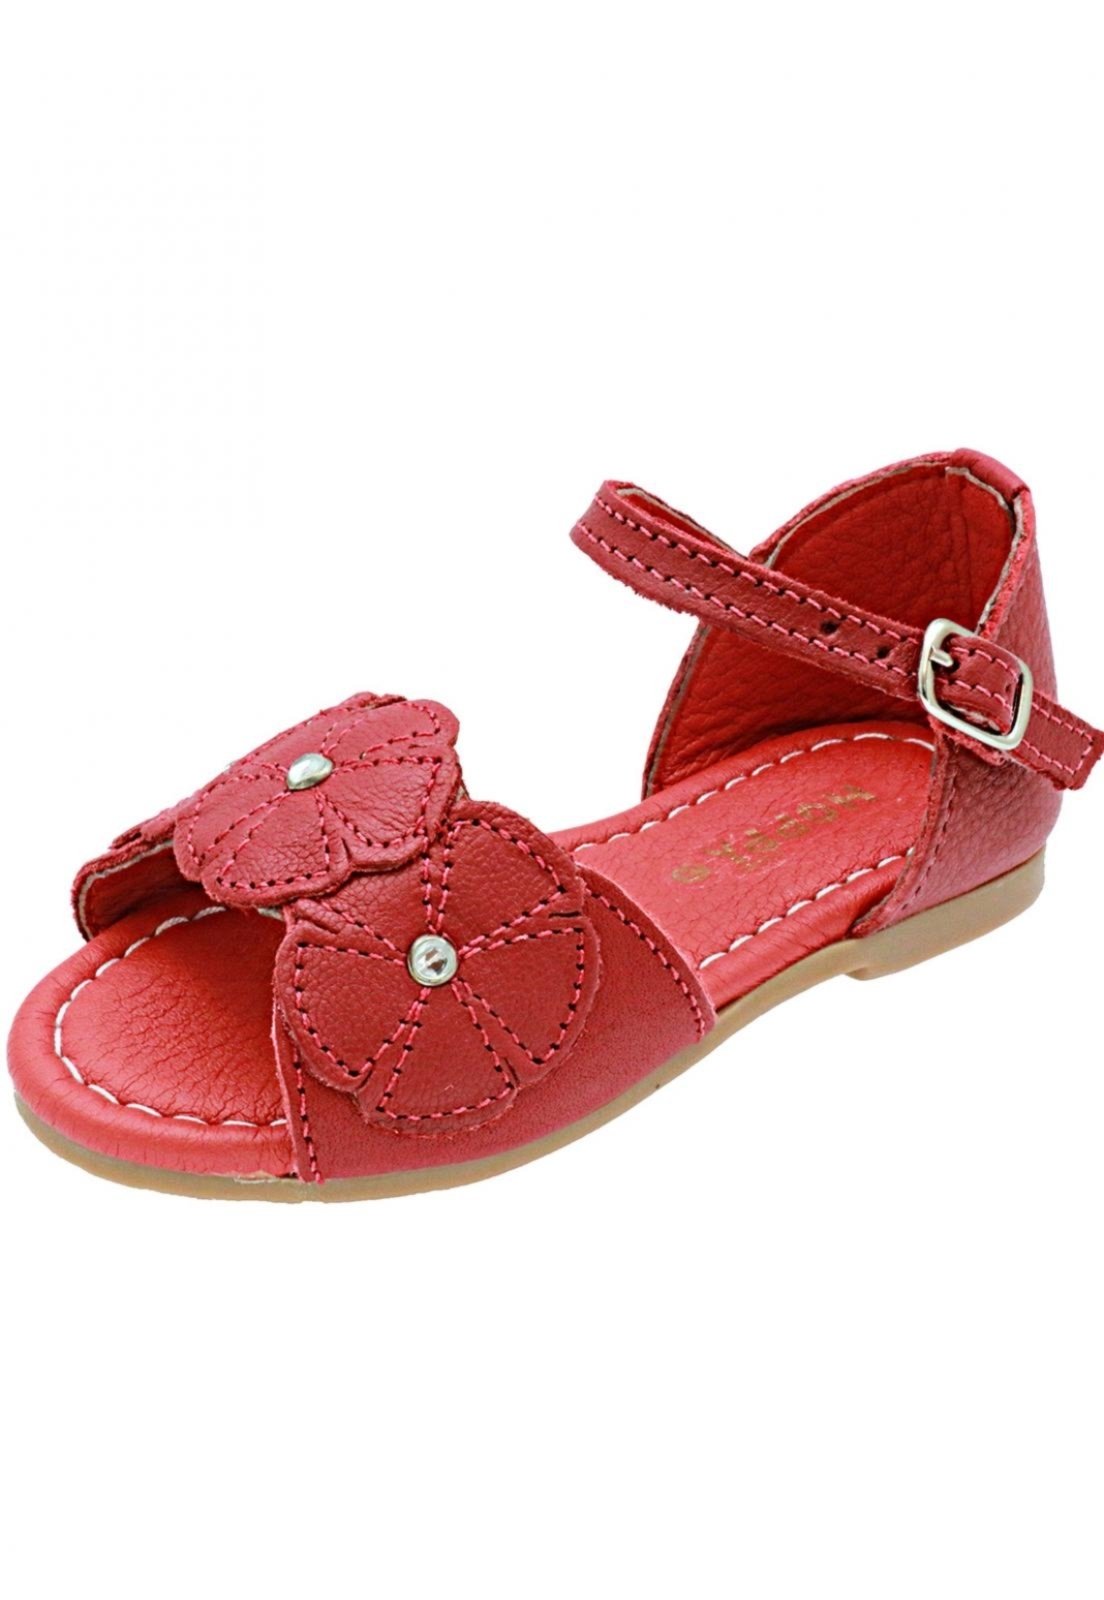 sandália infantil vermelha